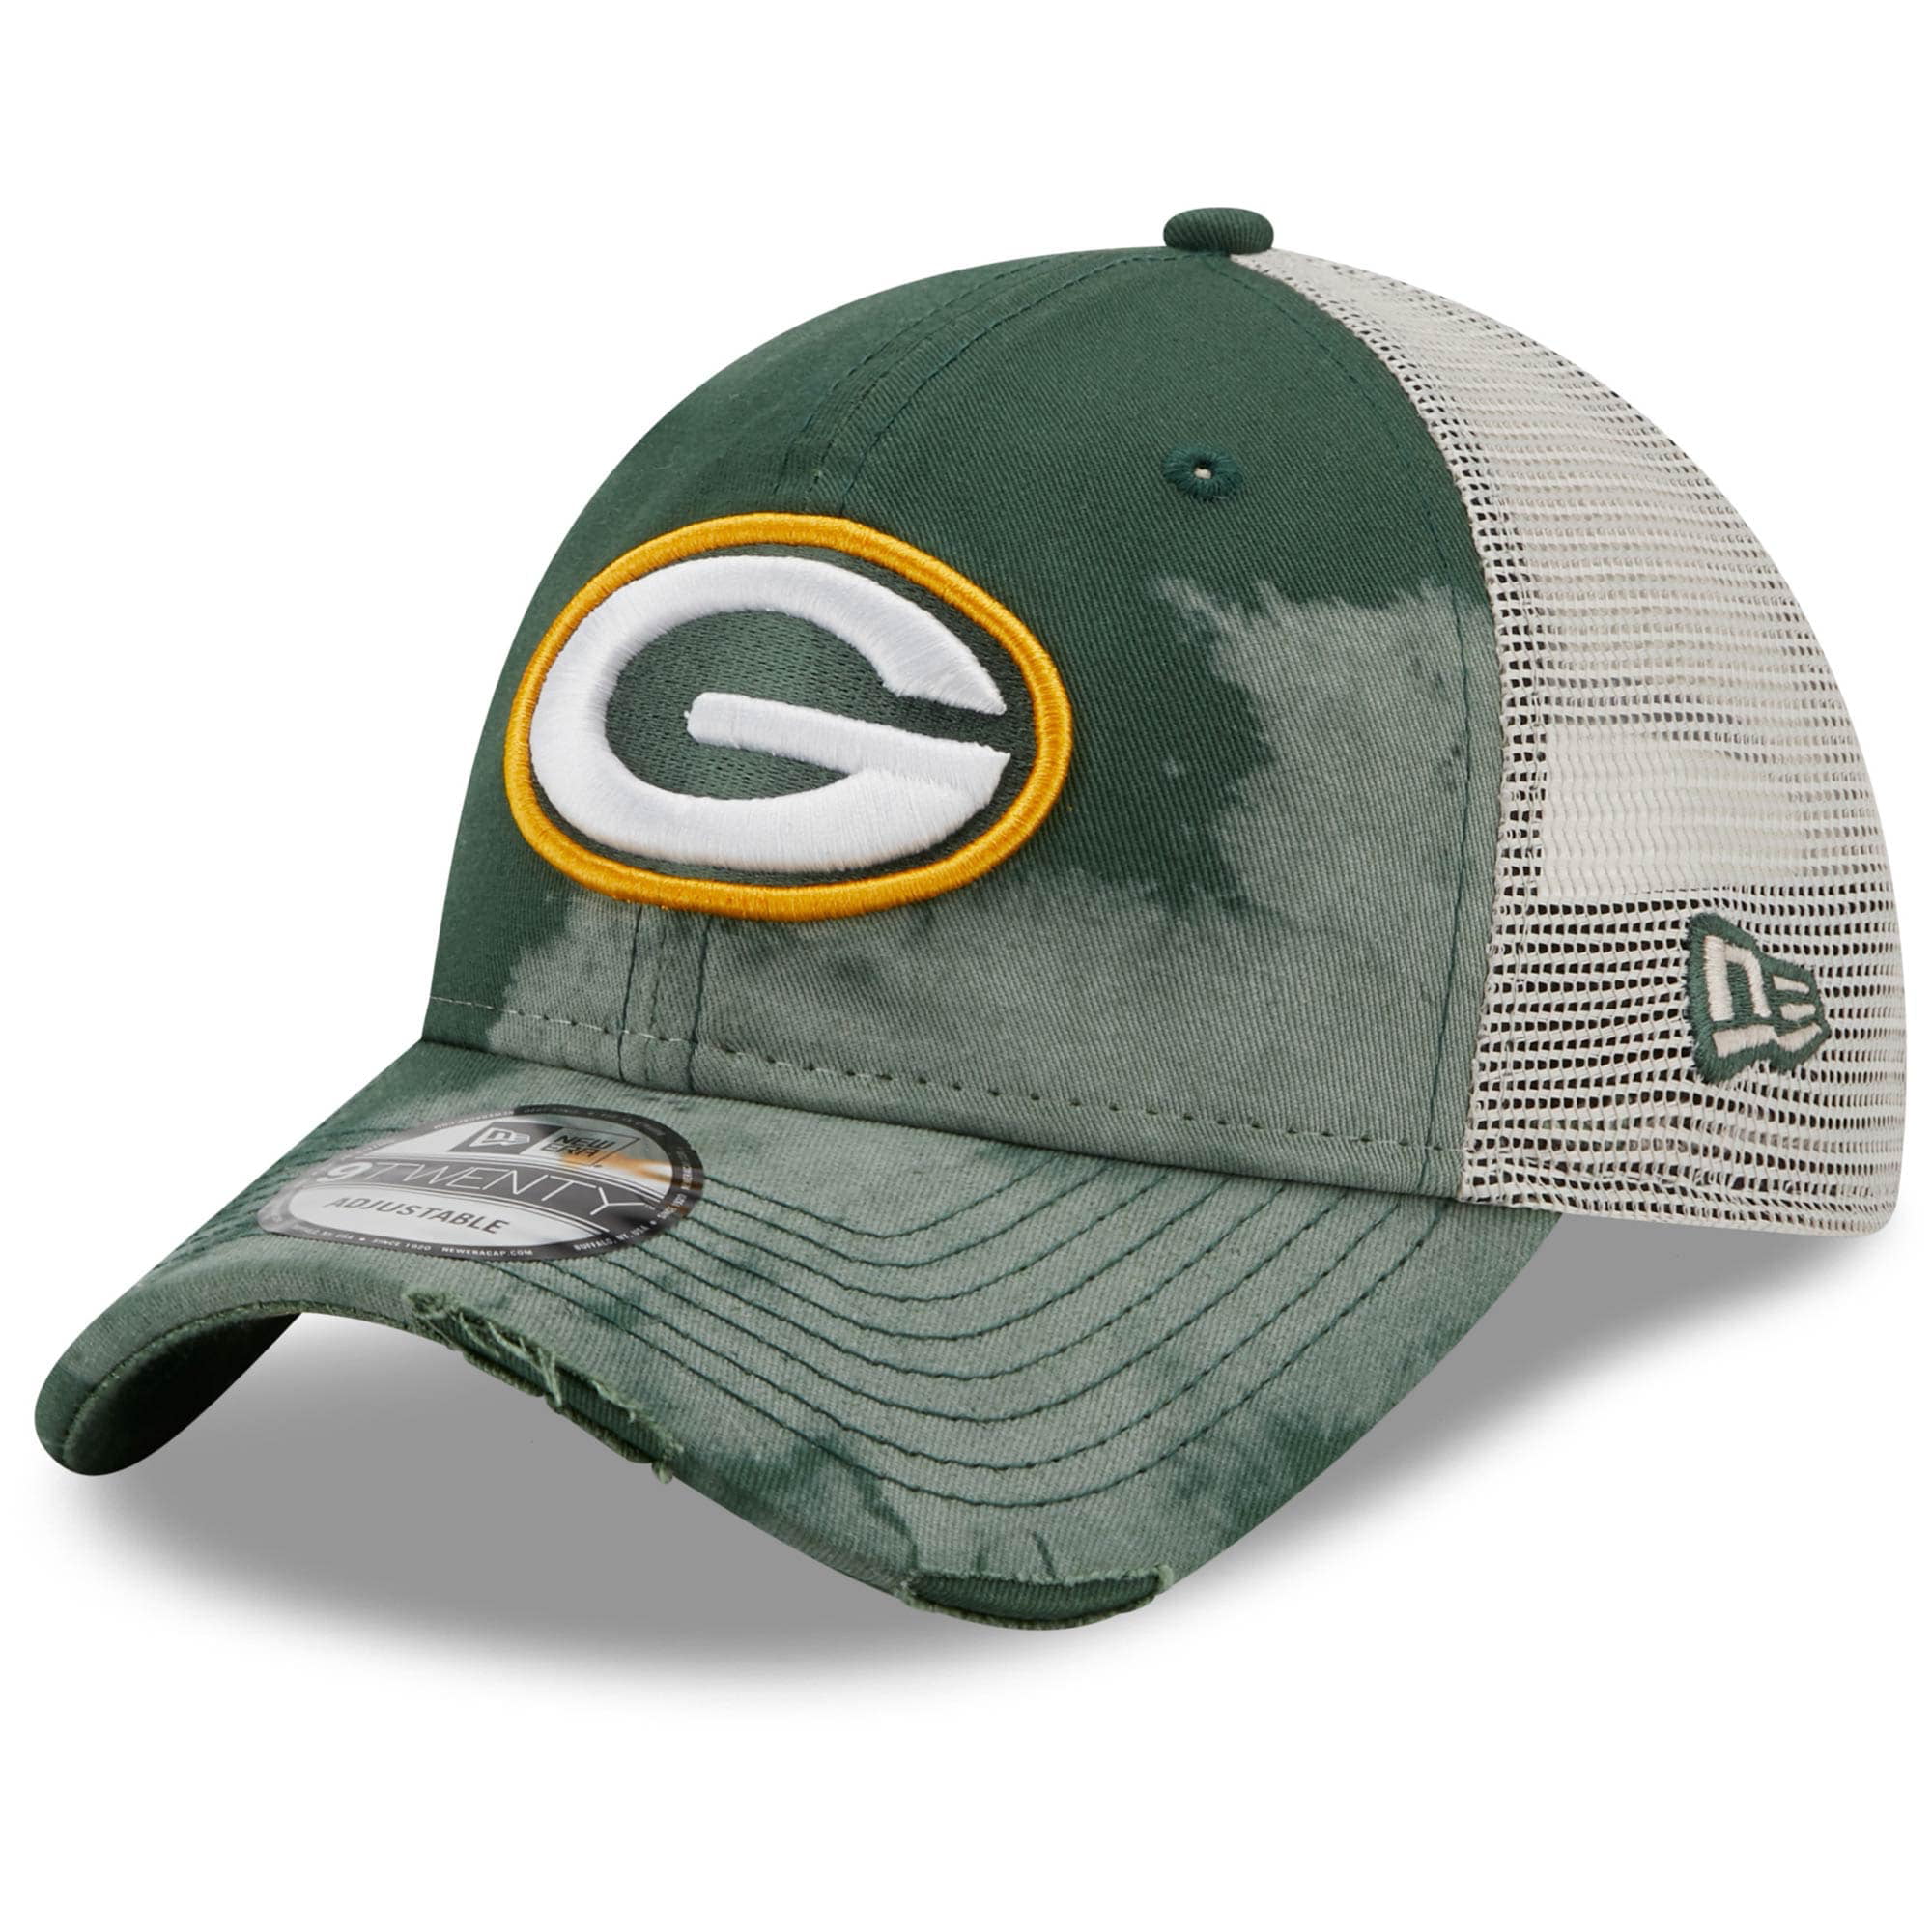 New Era Green Bay Packers Snapback Mesh Trucker Cap Hat One Size 